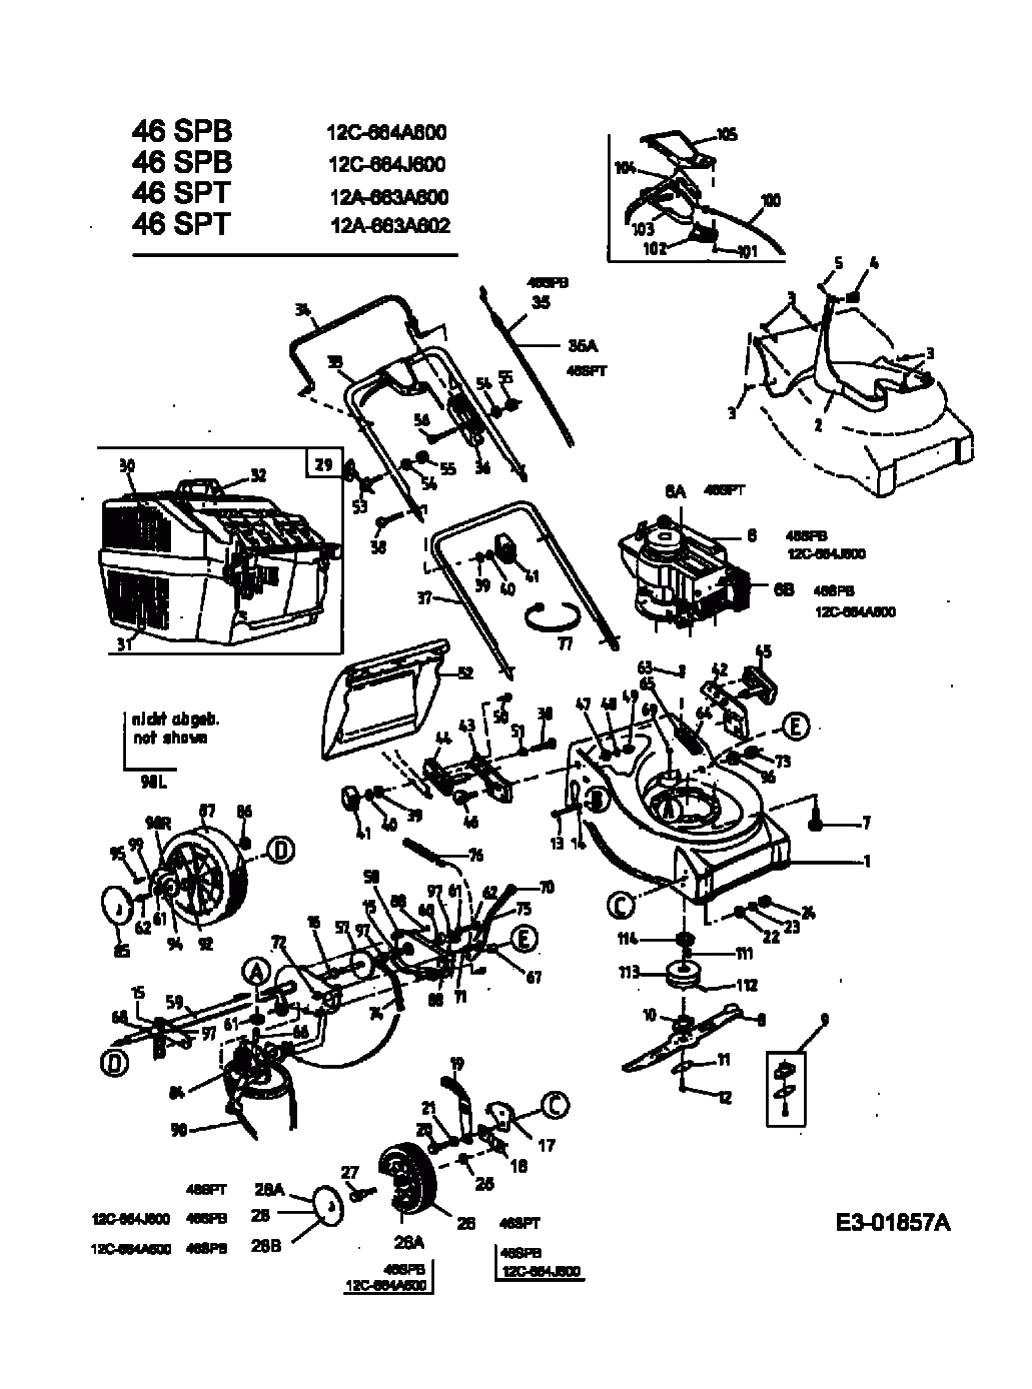 MTD Артикул 12C-664A600 (год выпуска 2003). Основная деталировка